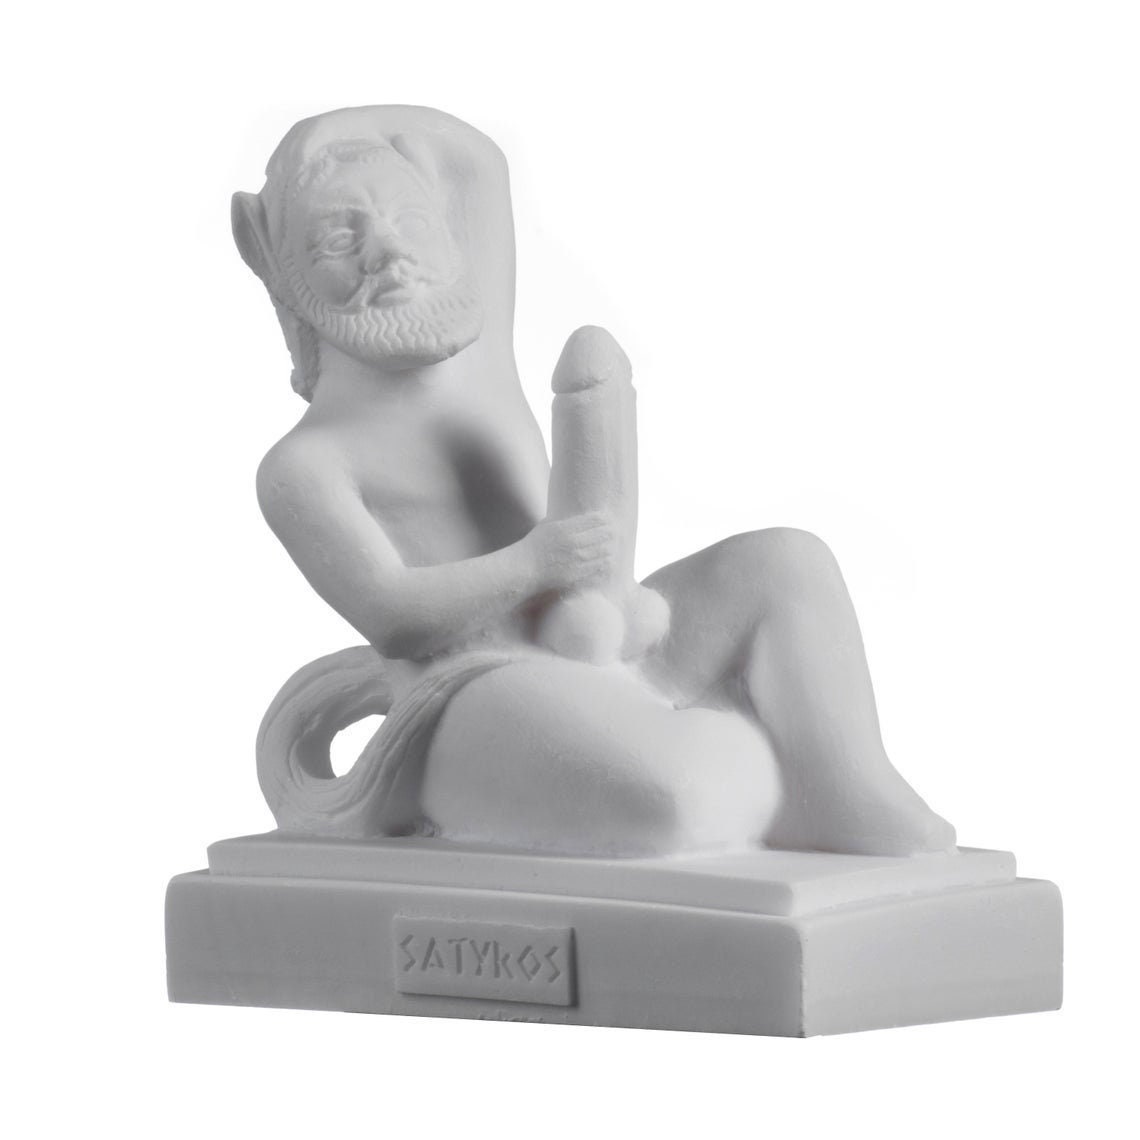 Satyr Greek Roman Mythology Penis Statue Handmade Alabaster